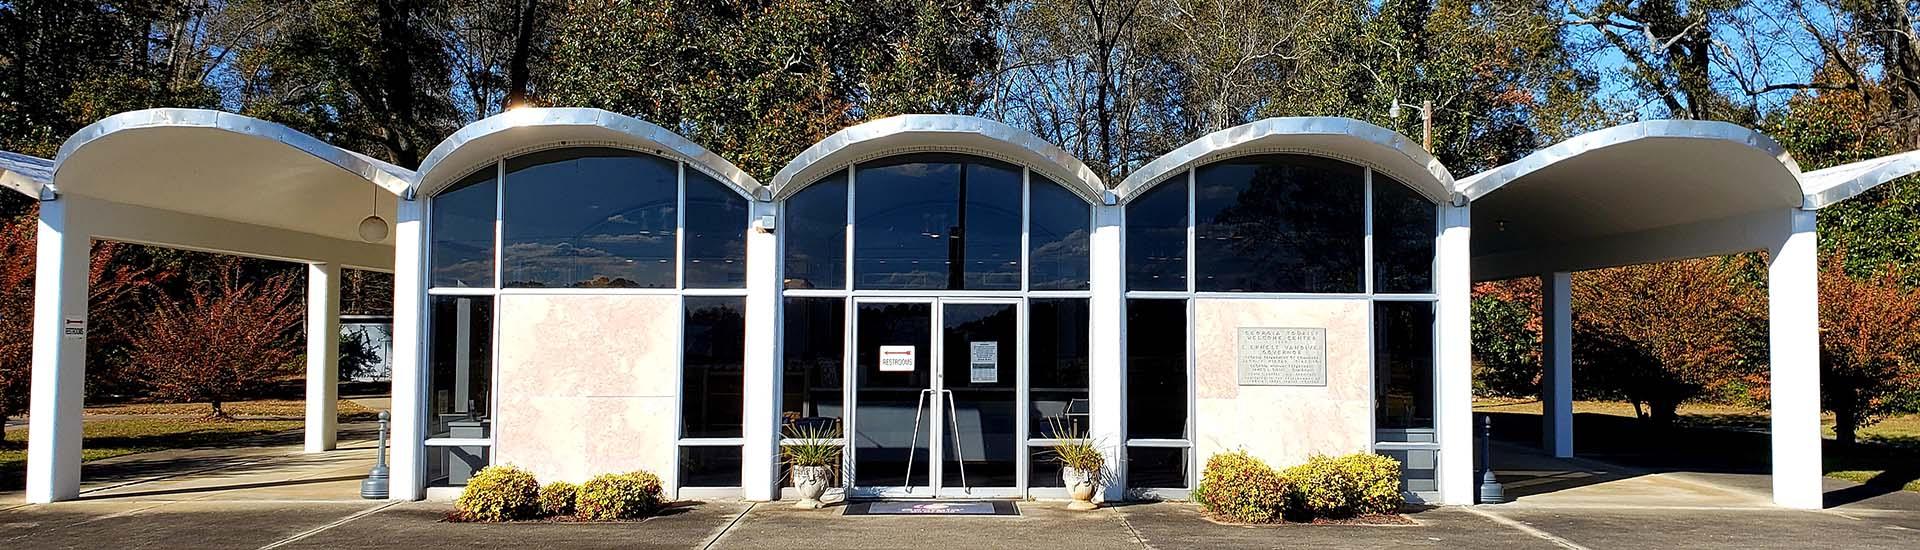 Sylvania Information Center